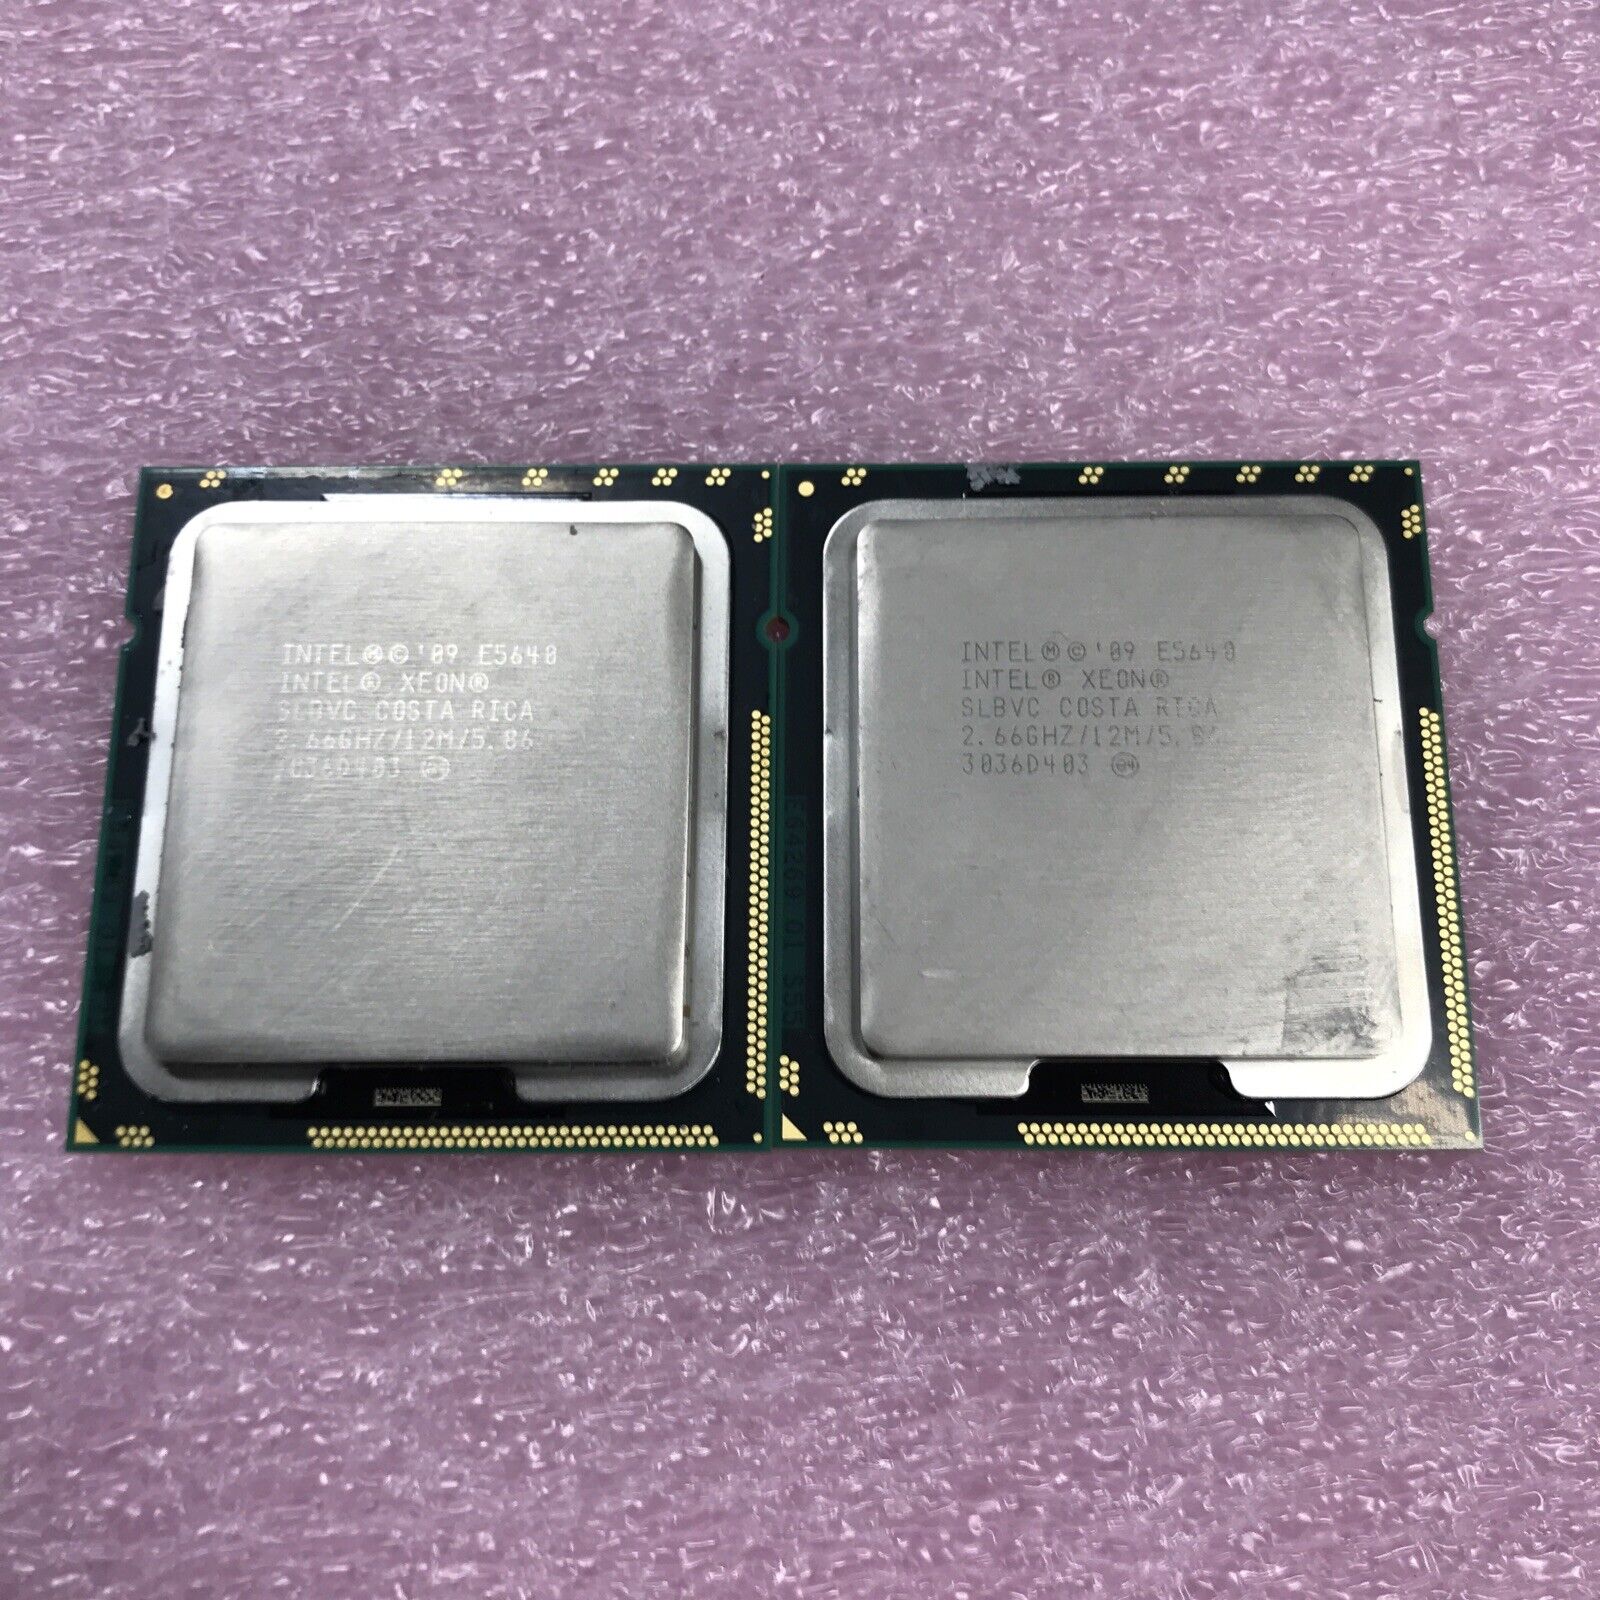 (Lot of 2) Intel E5640 Intel Xeon SLBVC  2.66GHZ 12M 5.86 3036D403 CPU Processor